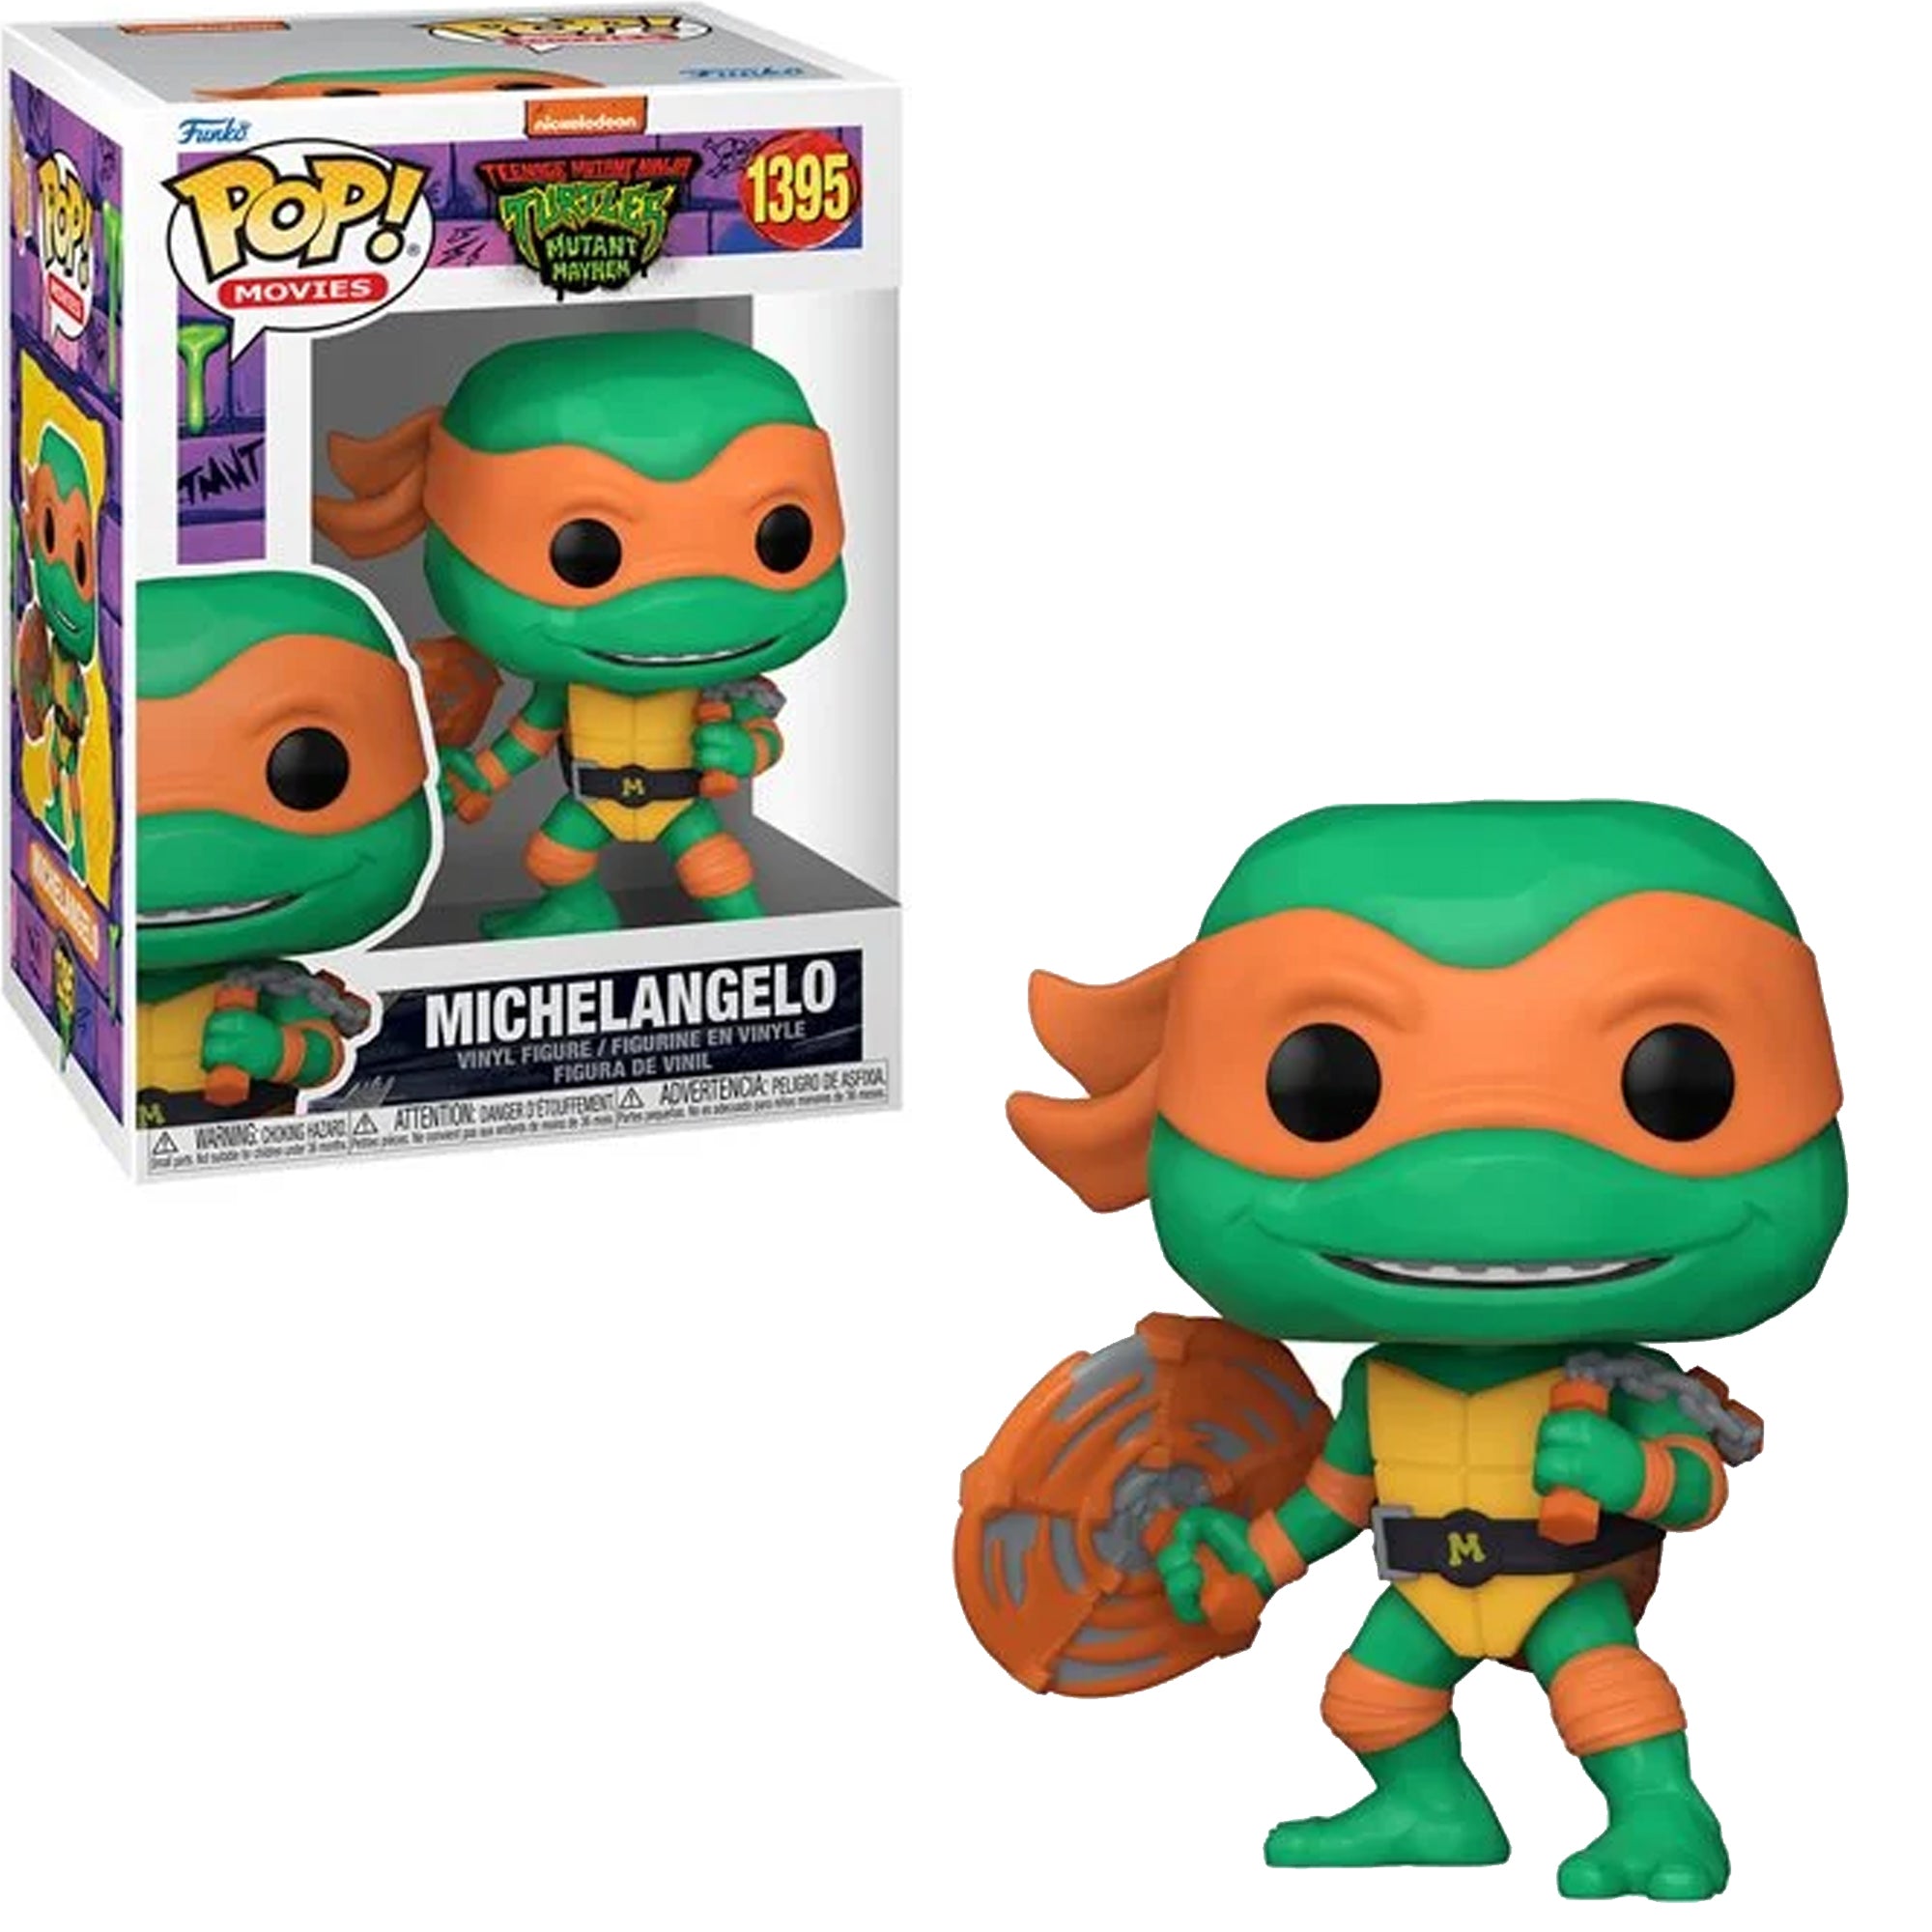 Funko SODA Teenage Mutant Ninja Turtles: Mutant Mayhem Donatello